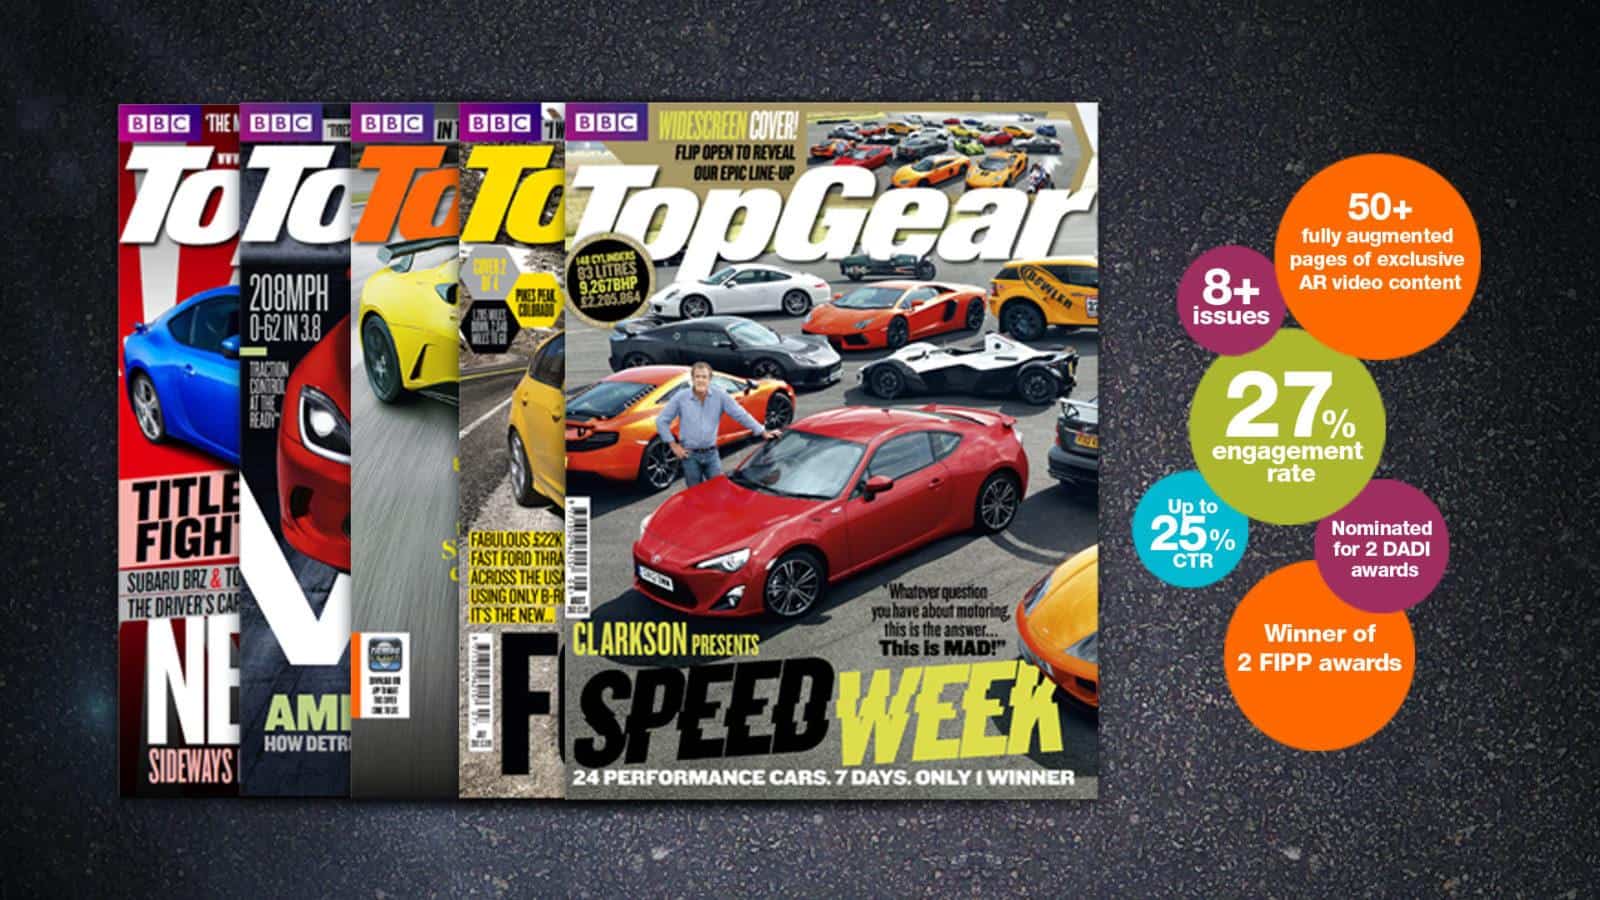 Top Gear magazine